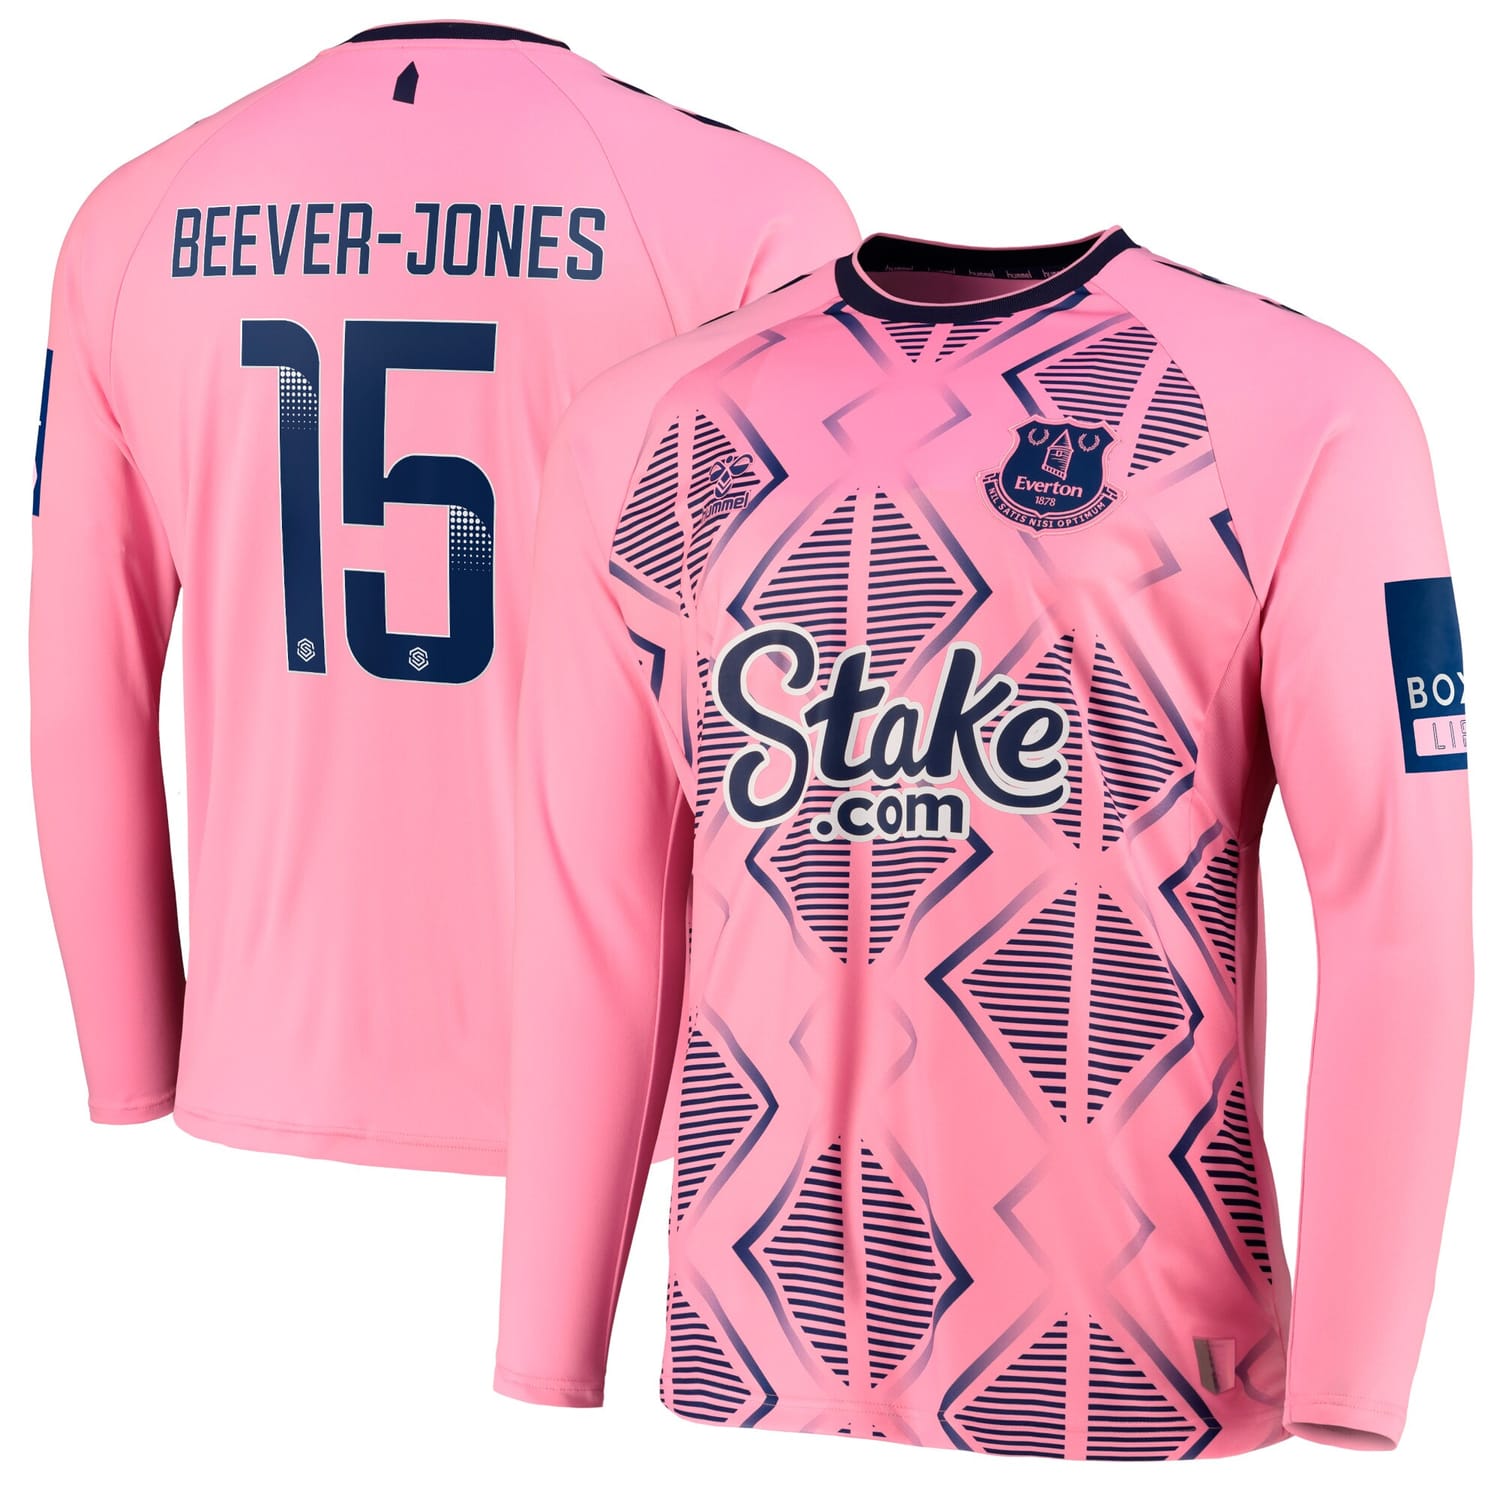 Premier League Everton Away WSL Jersey Shirt Long Sleeve 2022-23 player Aggie Beever-Jones 15 printing for Men